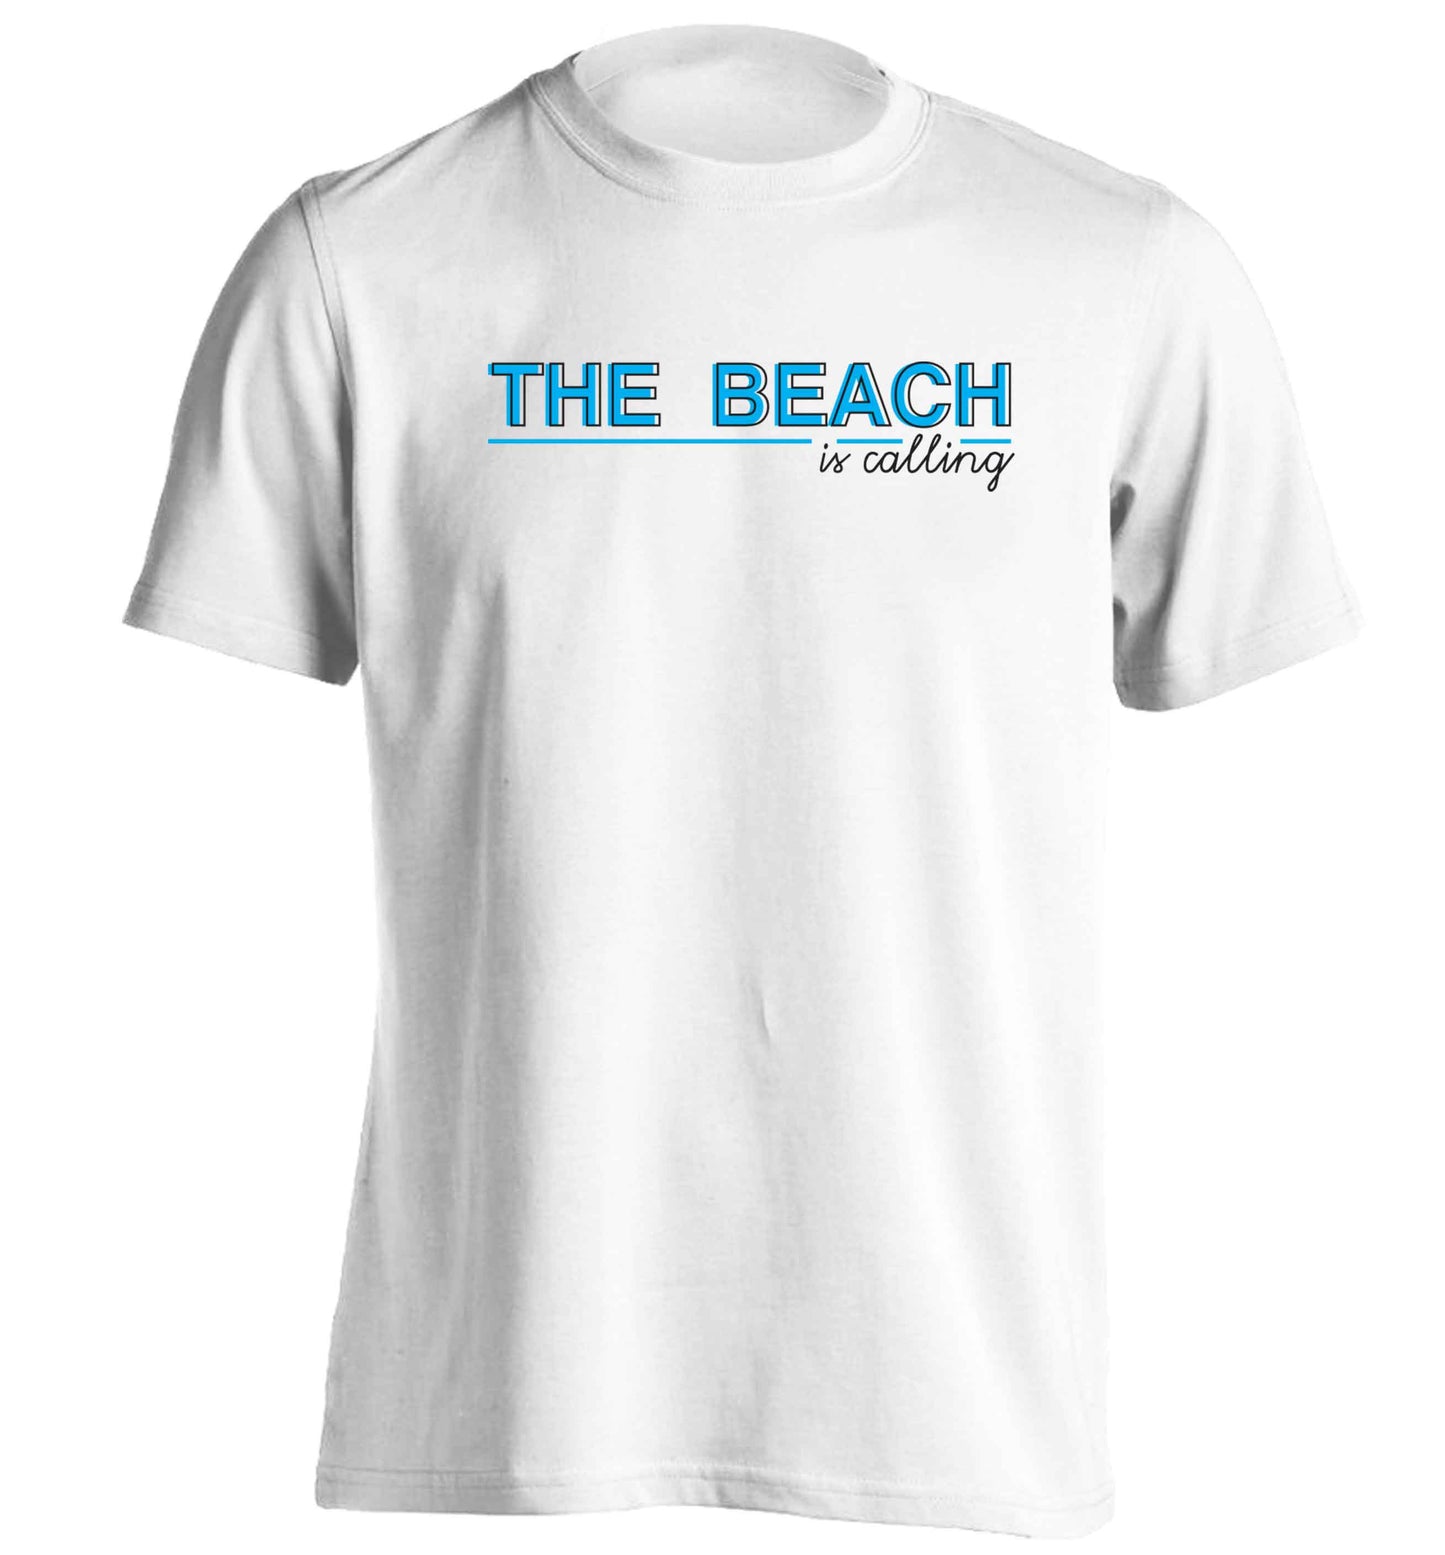 The beach is calling adults unisex white Tshirt 2XL